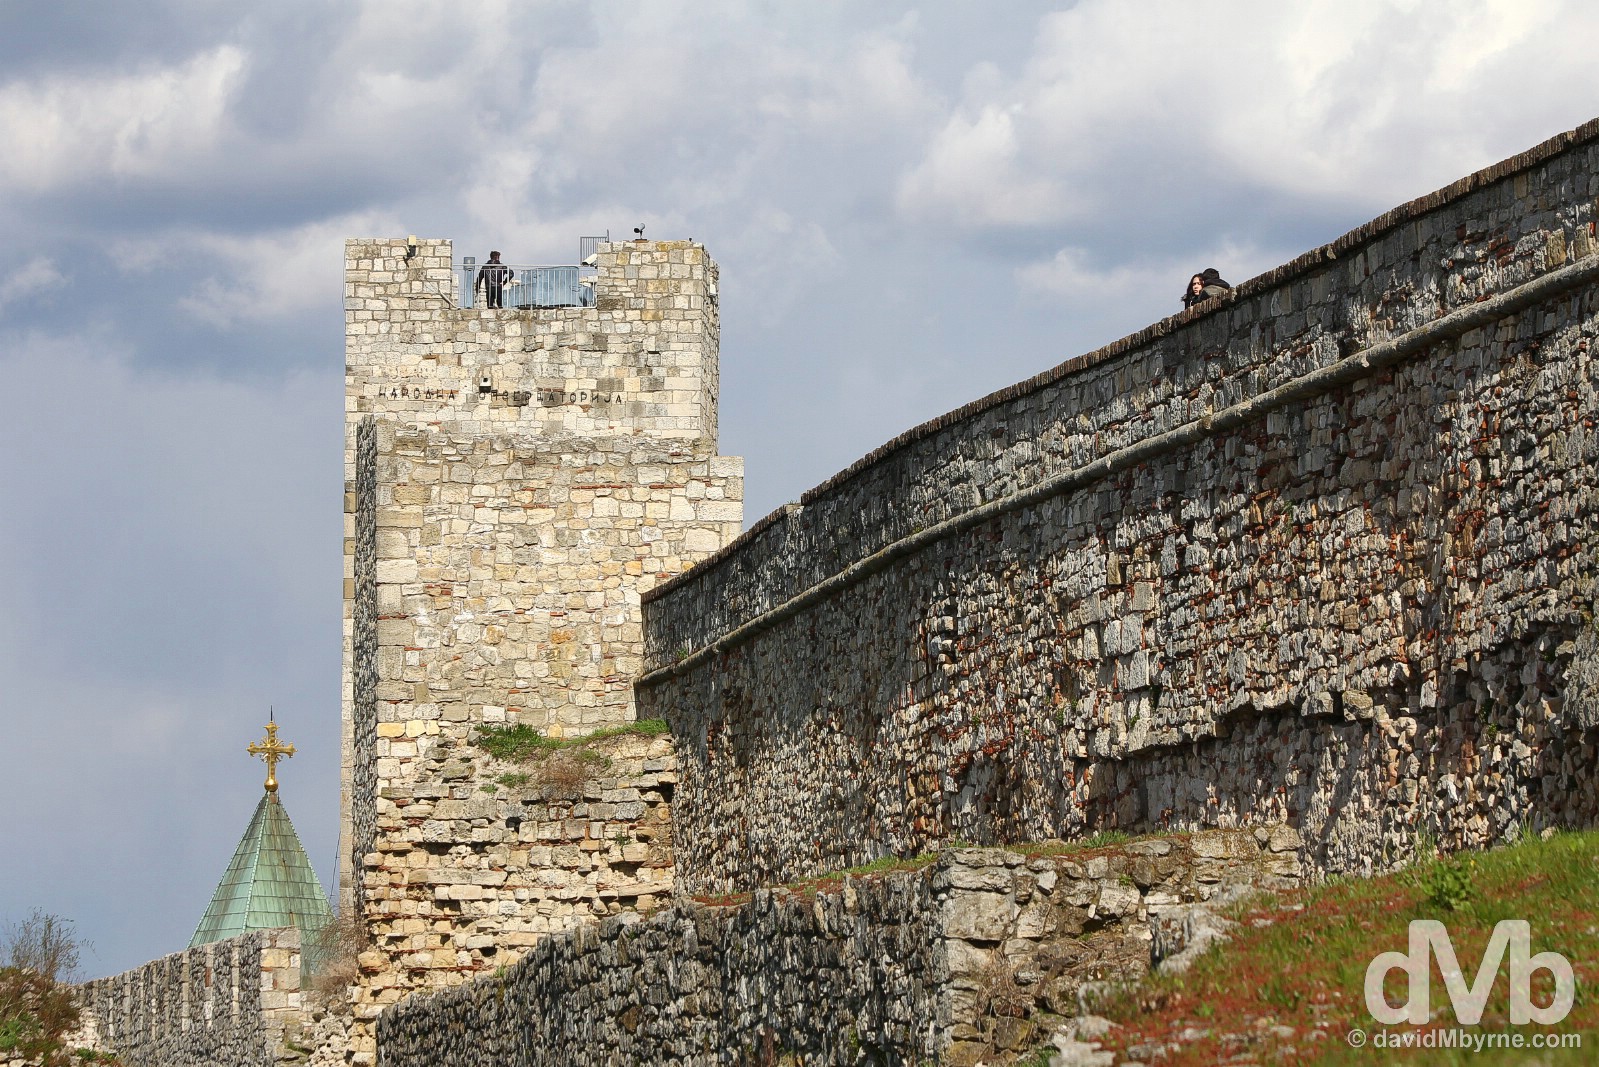 Atop the walls of the Kalemegdam Citadel overlooking the Danube River in Belgrade, Serbia. April 3, 2015.